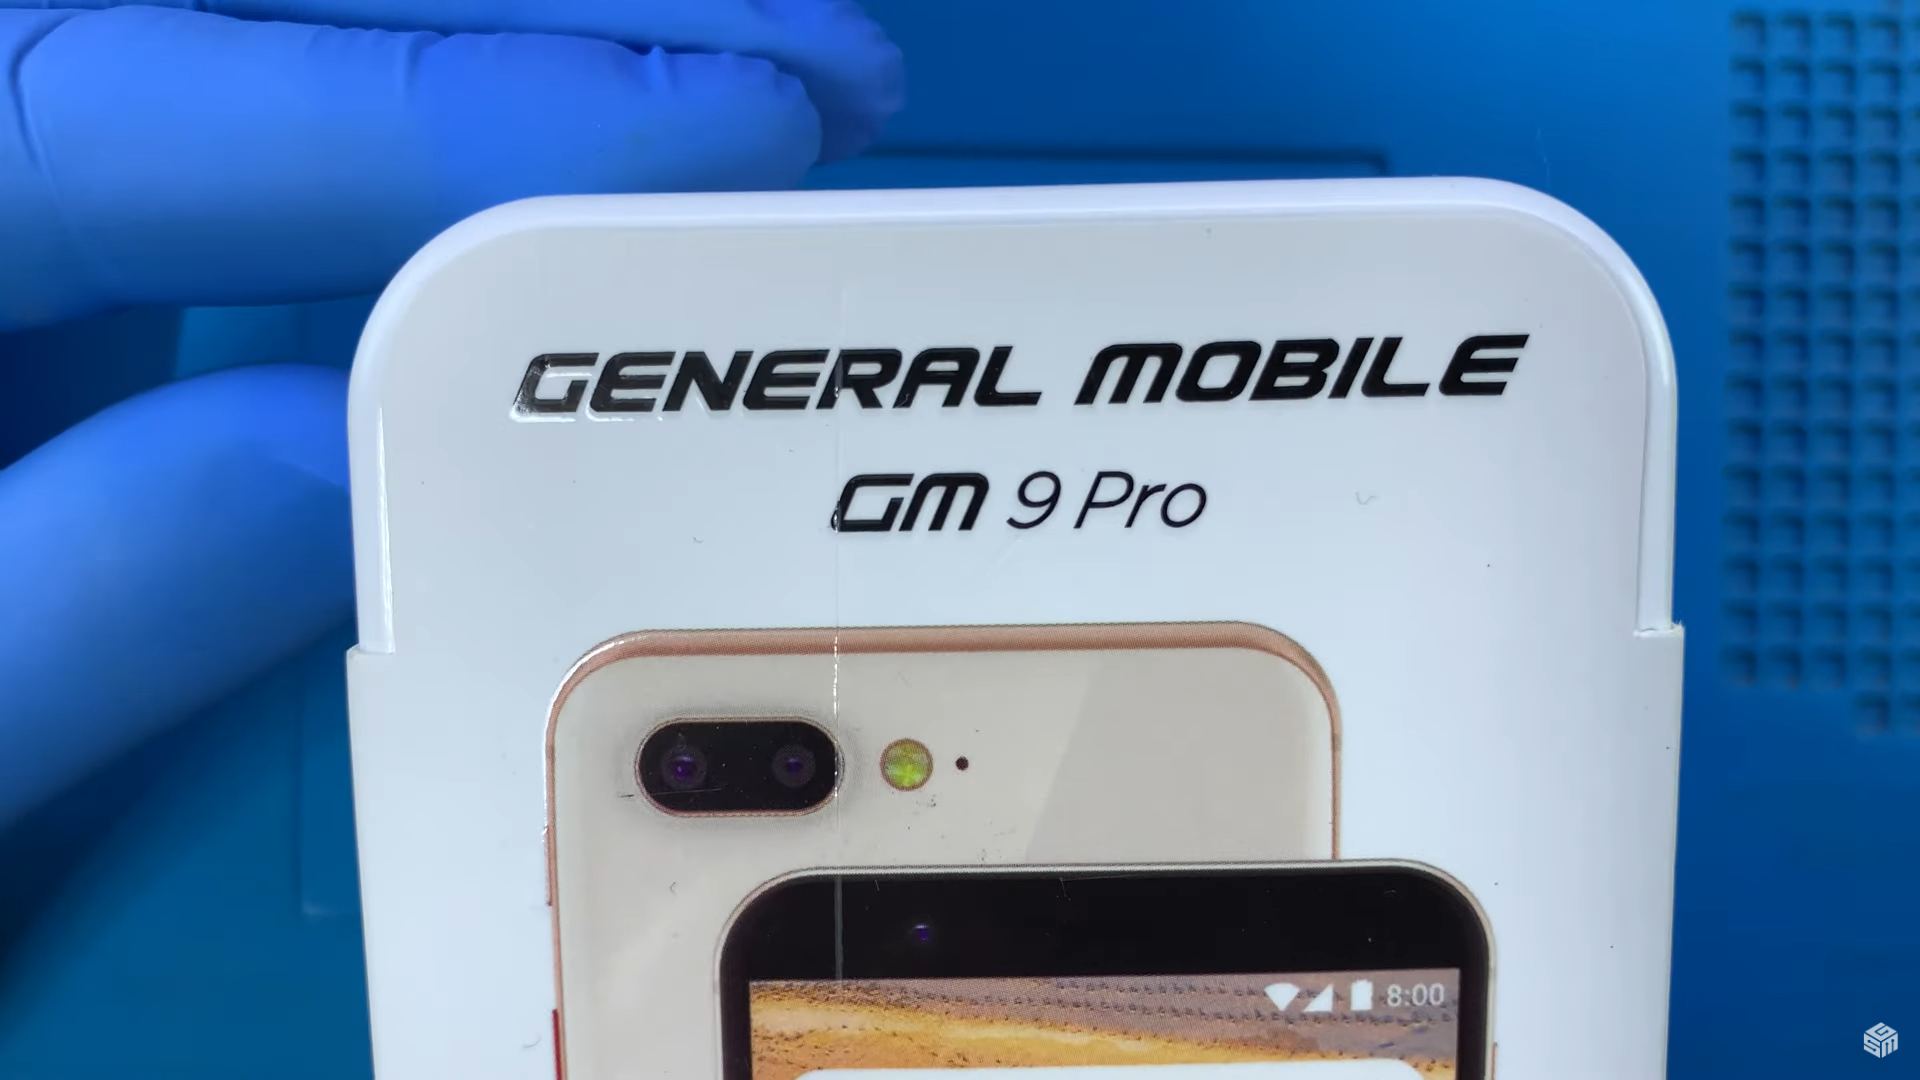 general mobile gm 9 pro ekran degisimi fiyati 600 tl gsm iletisim